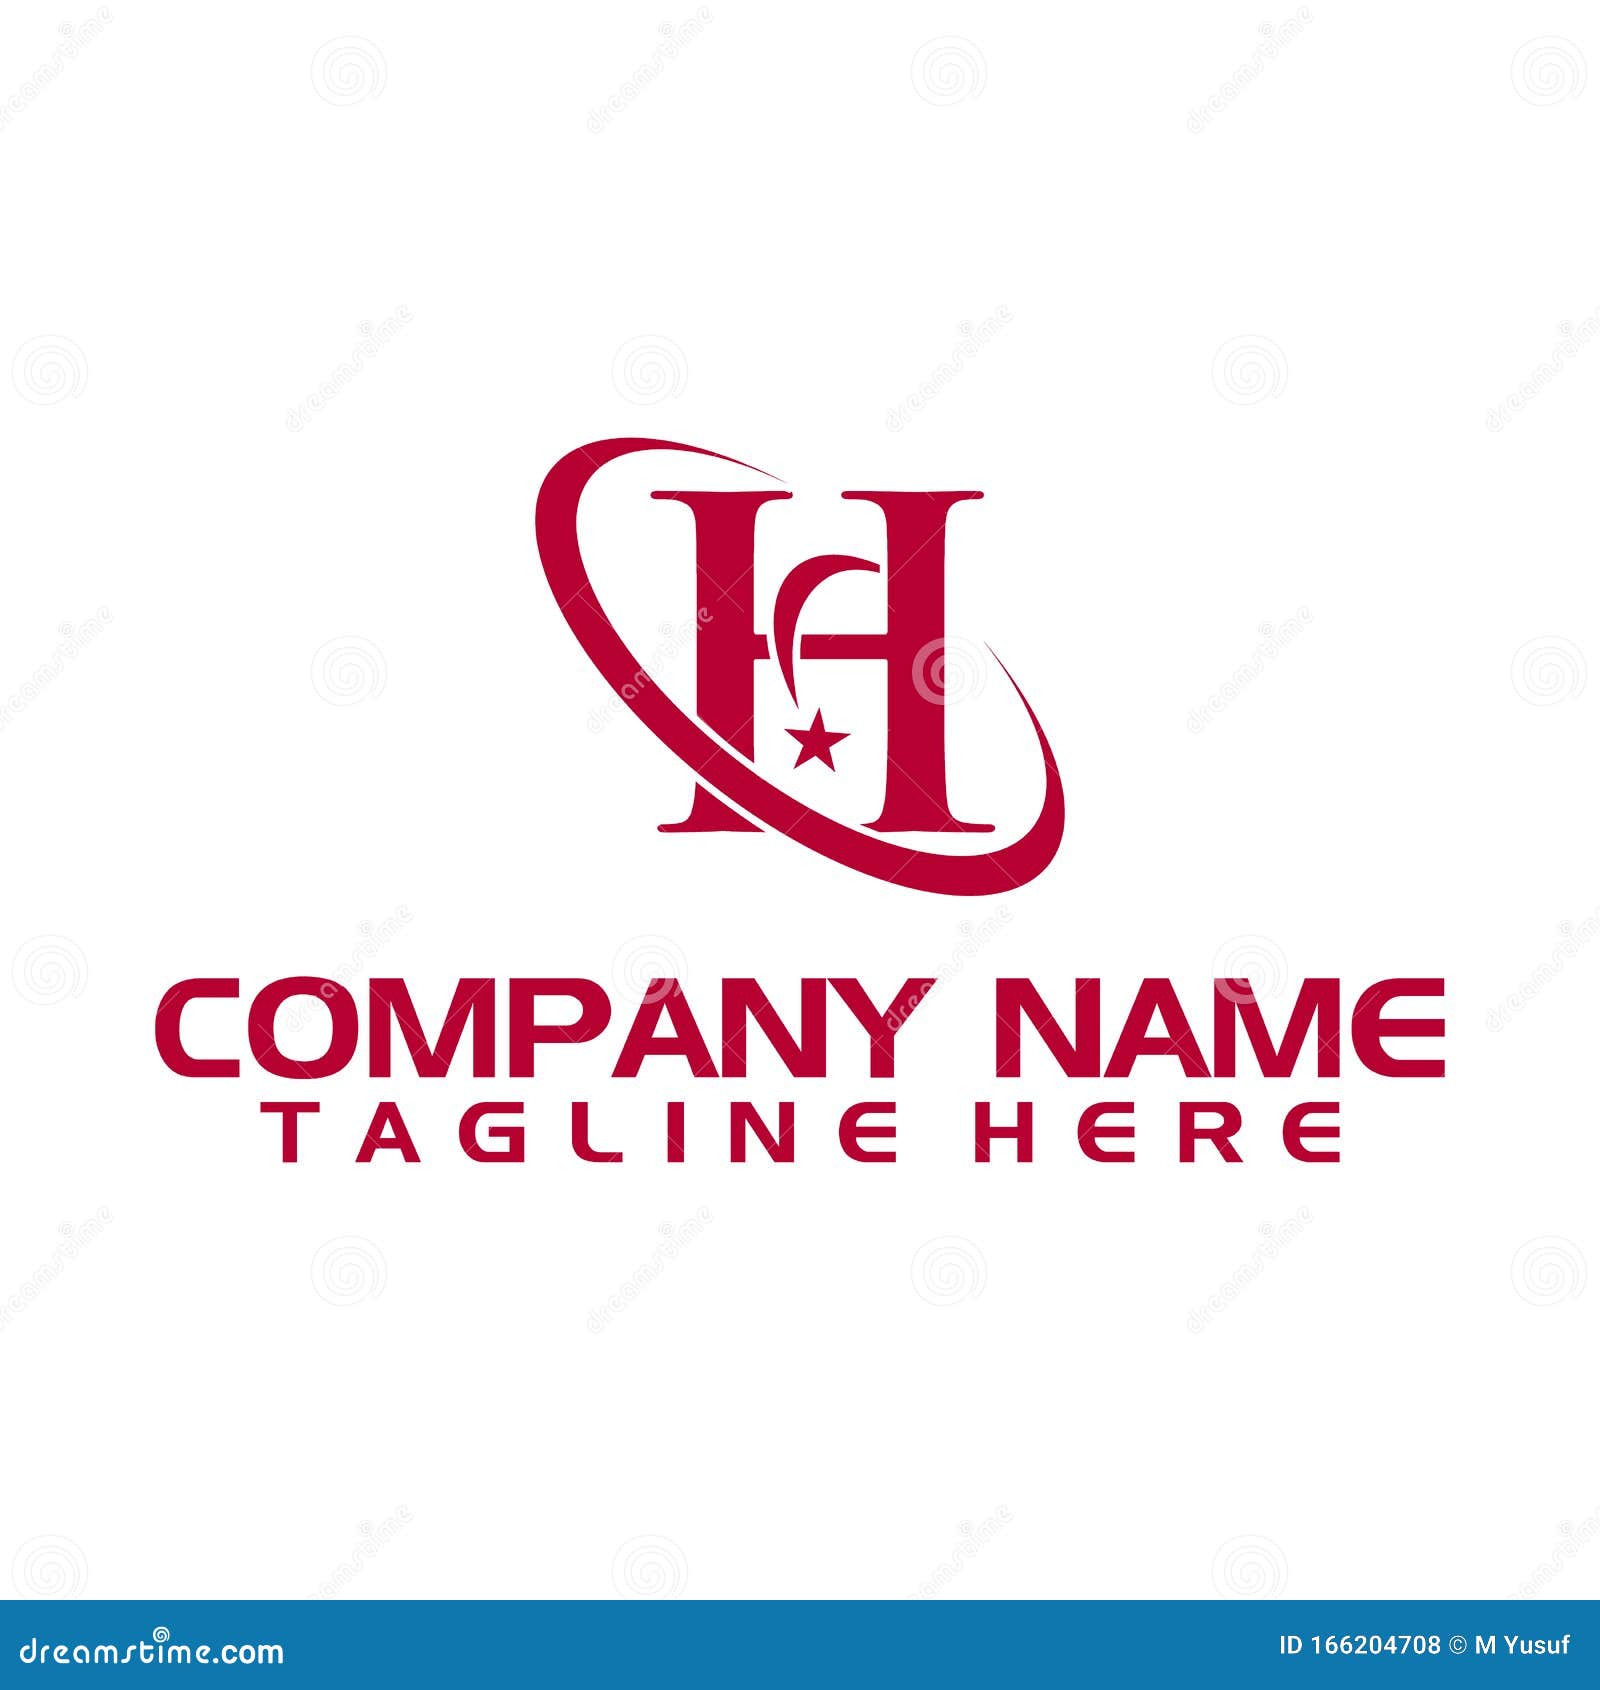 H logo. H monogram logo stock vector. Illustration of corporate ...